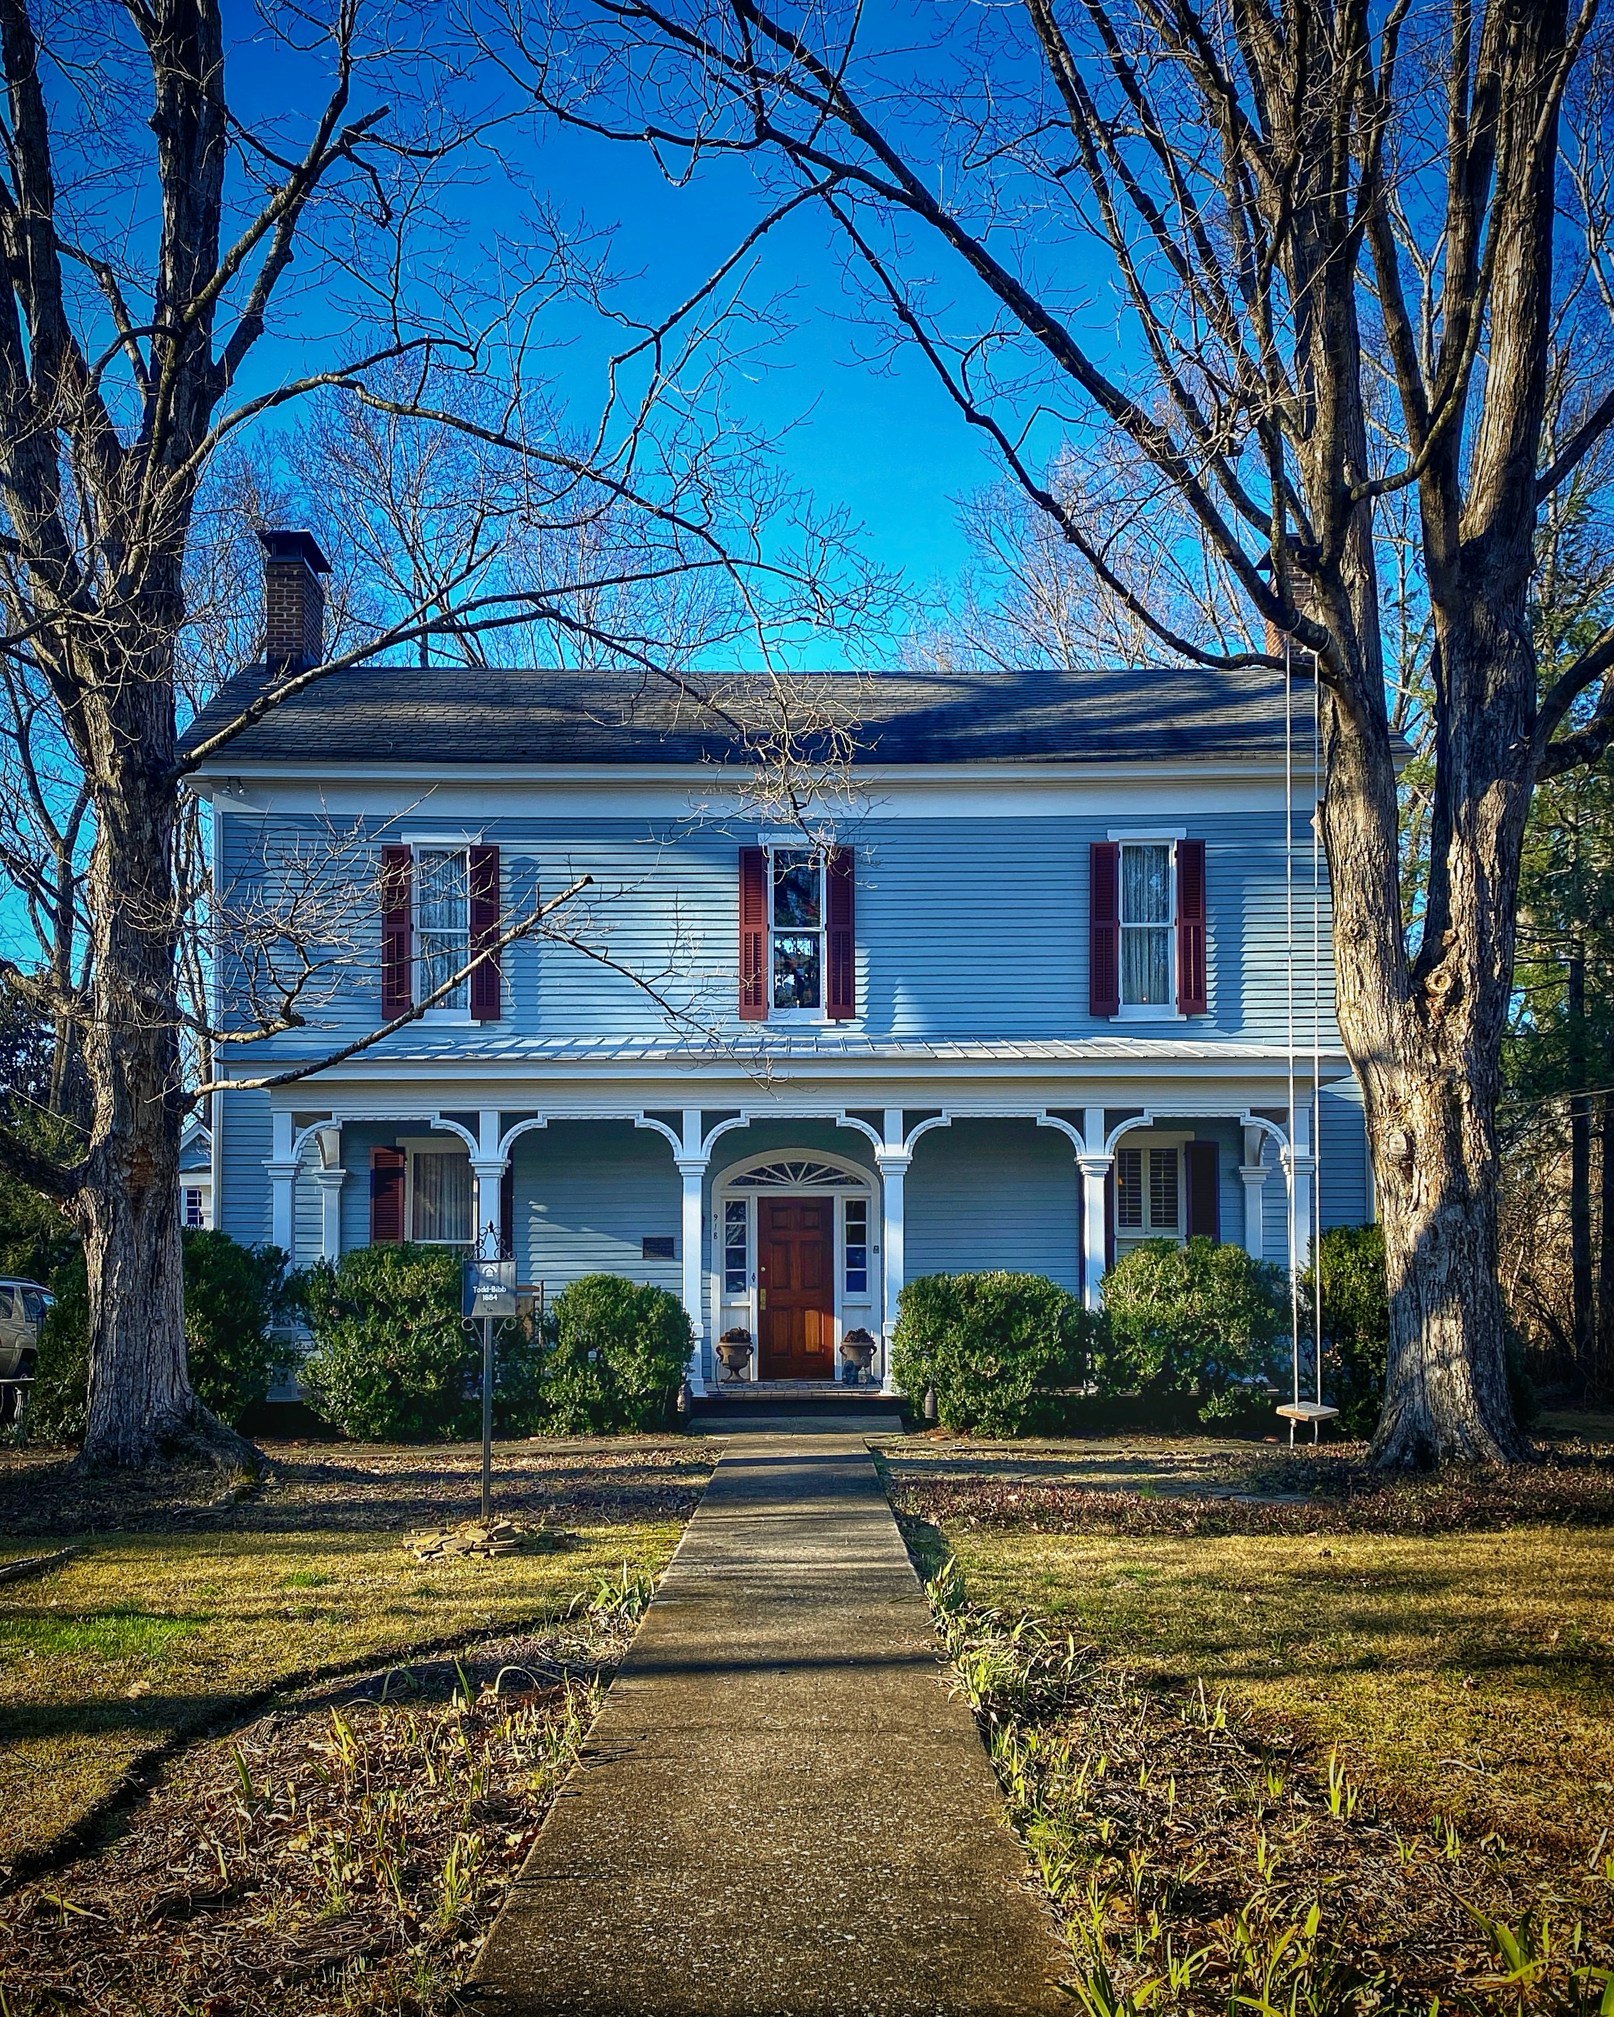 Todd-Bibb House, Franklin